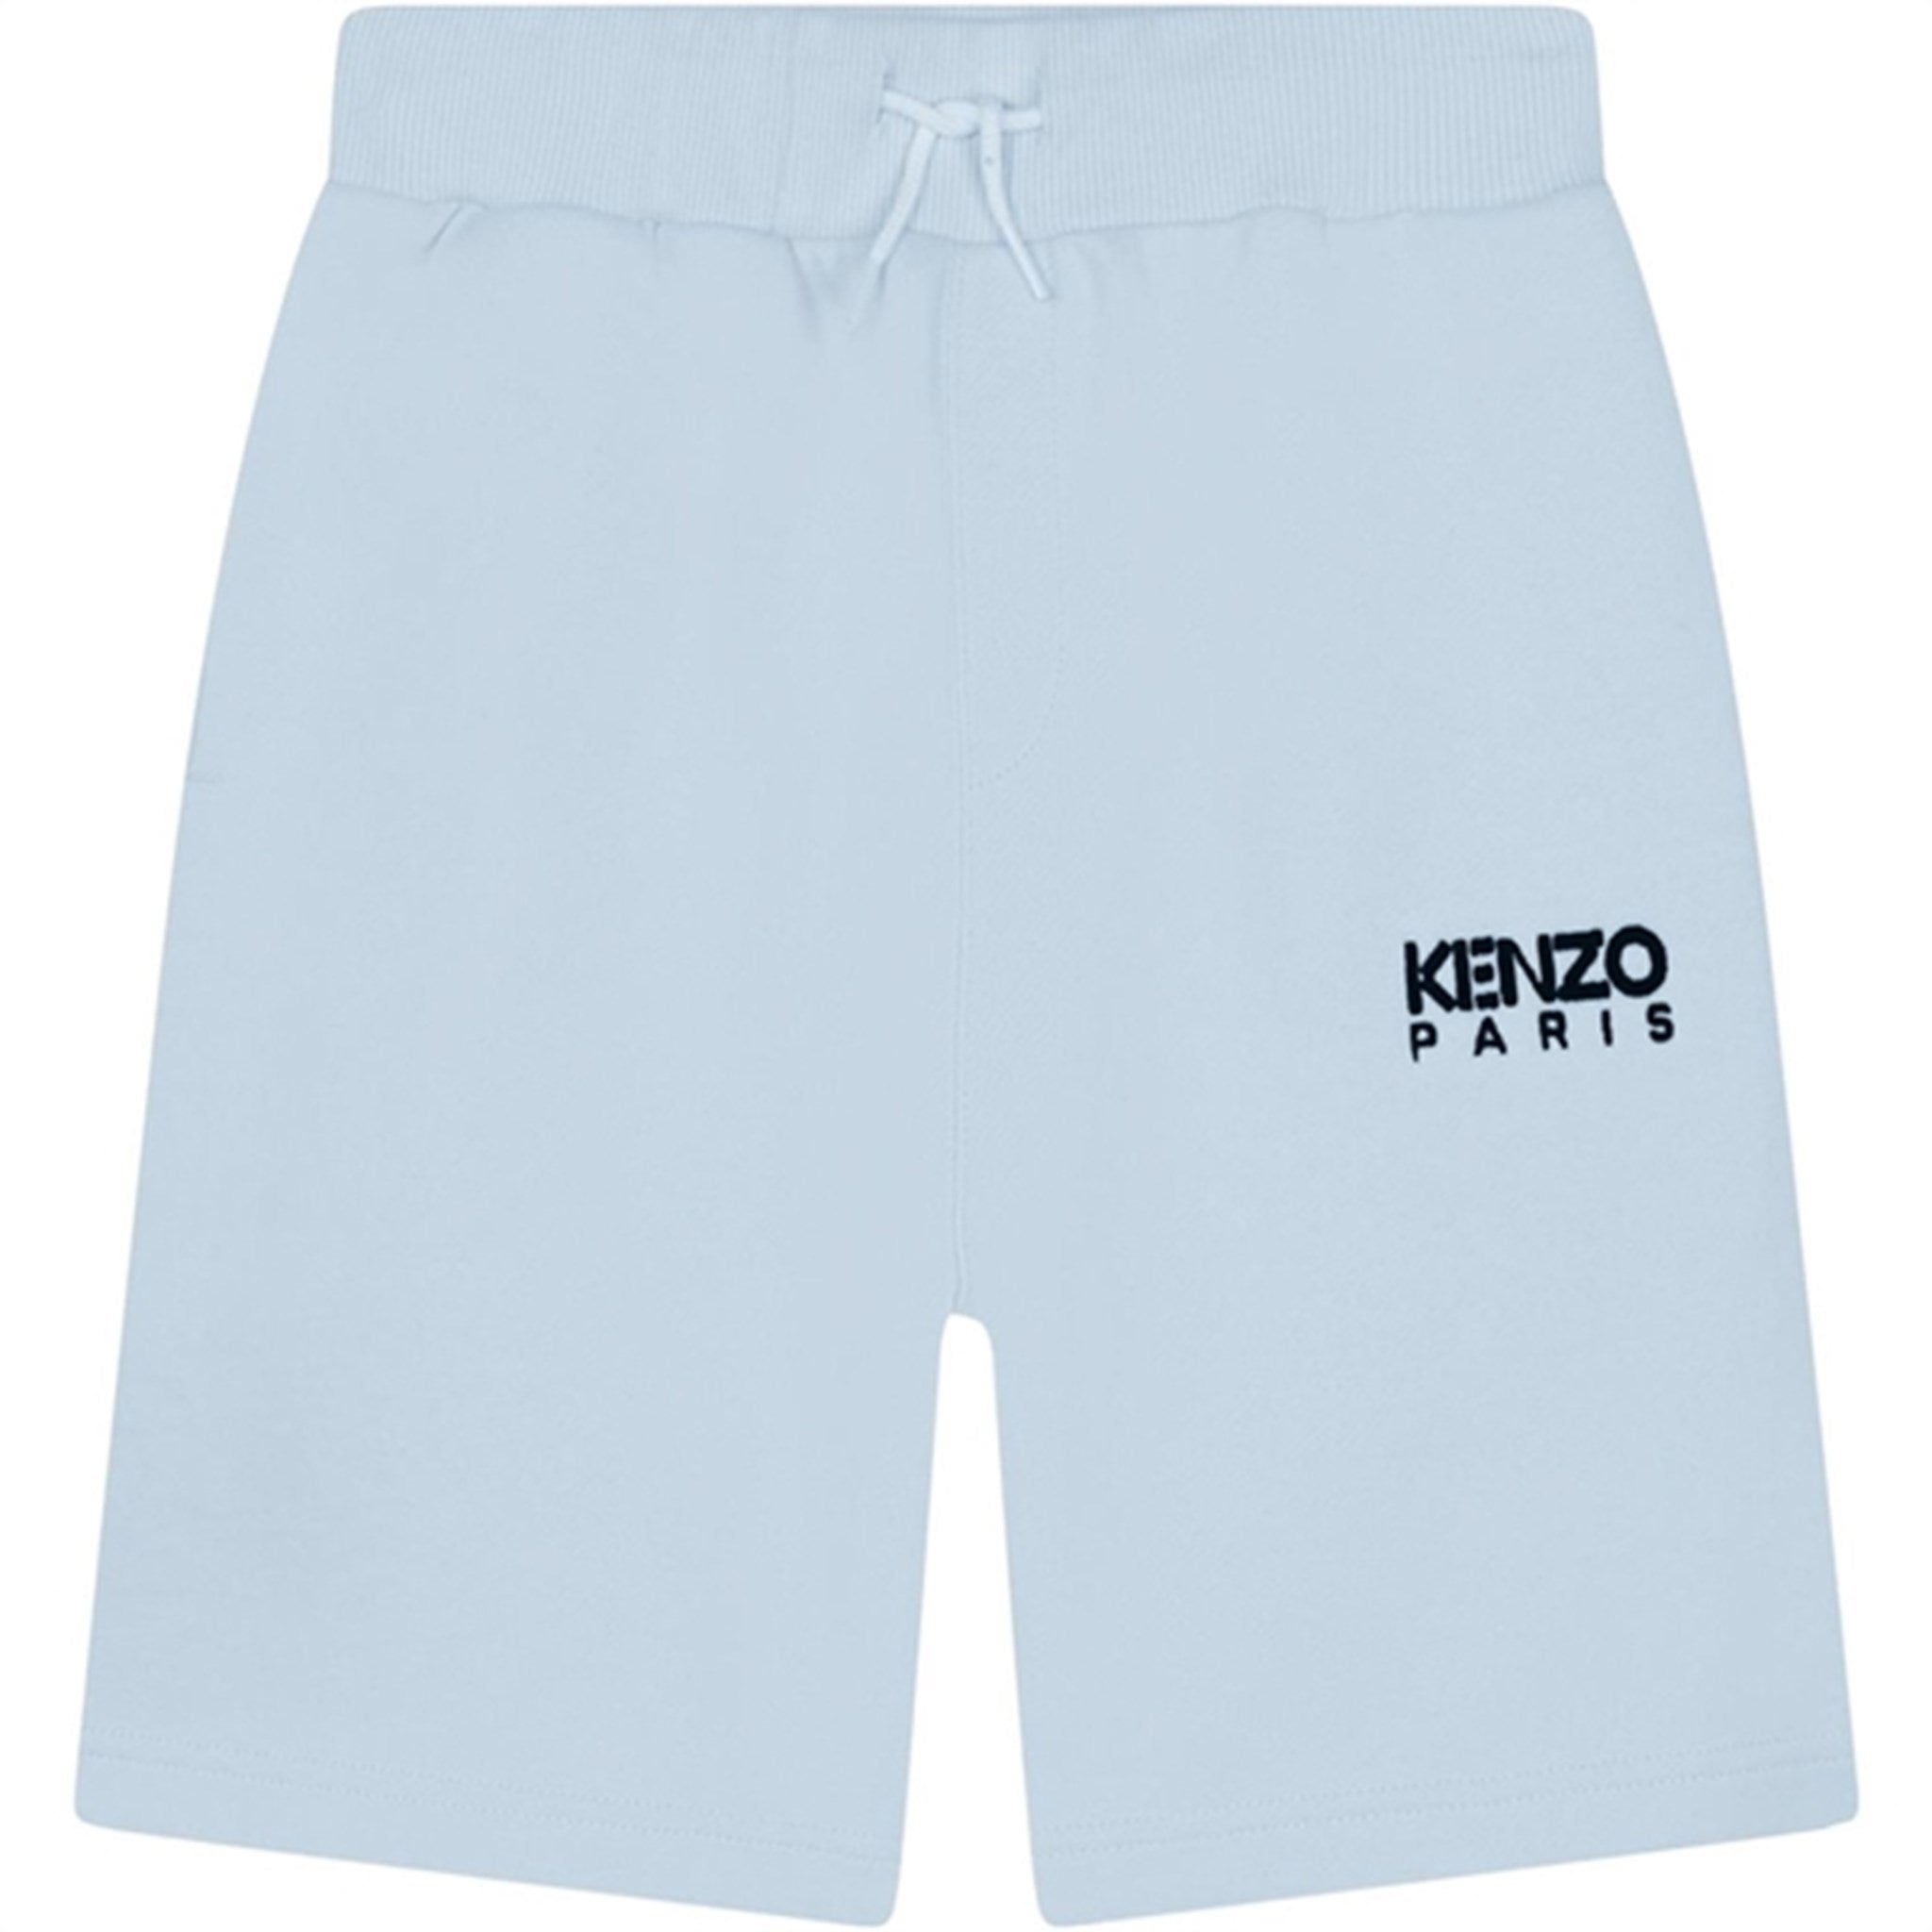 Kenzo Bermuda Shorts Pale Blue